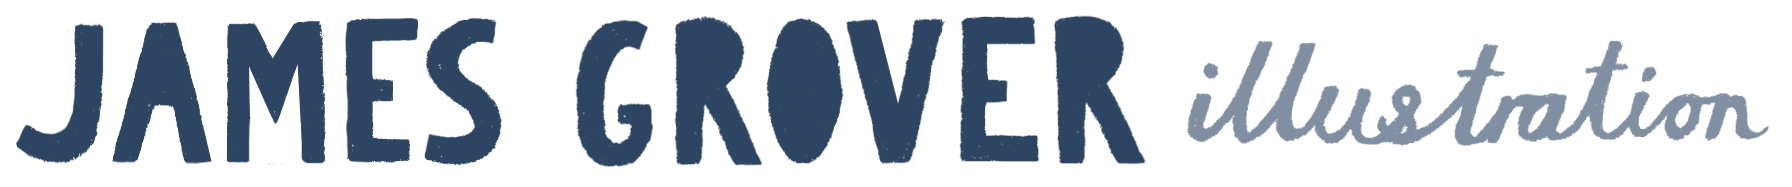 James Grover Illustration logo